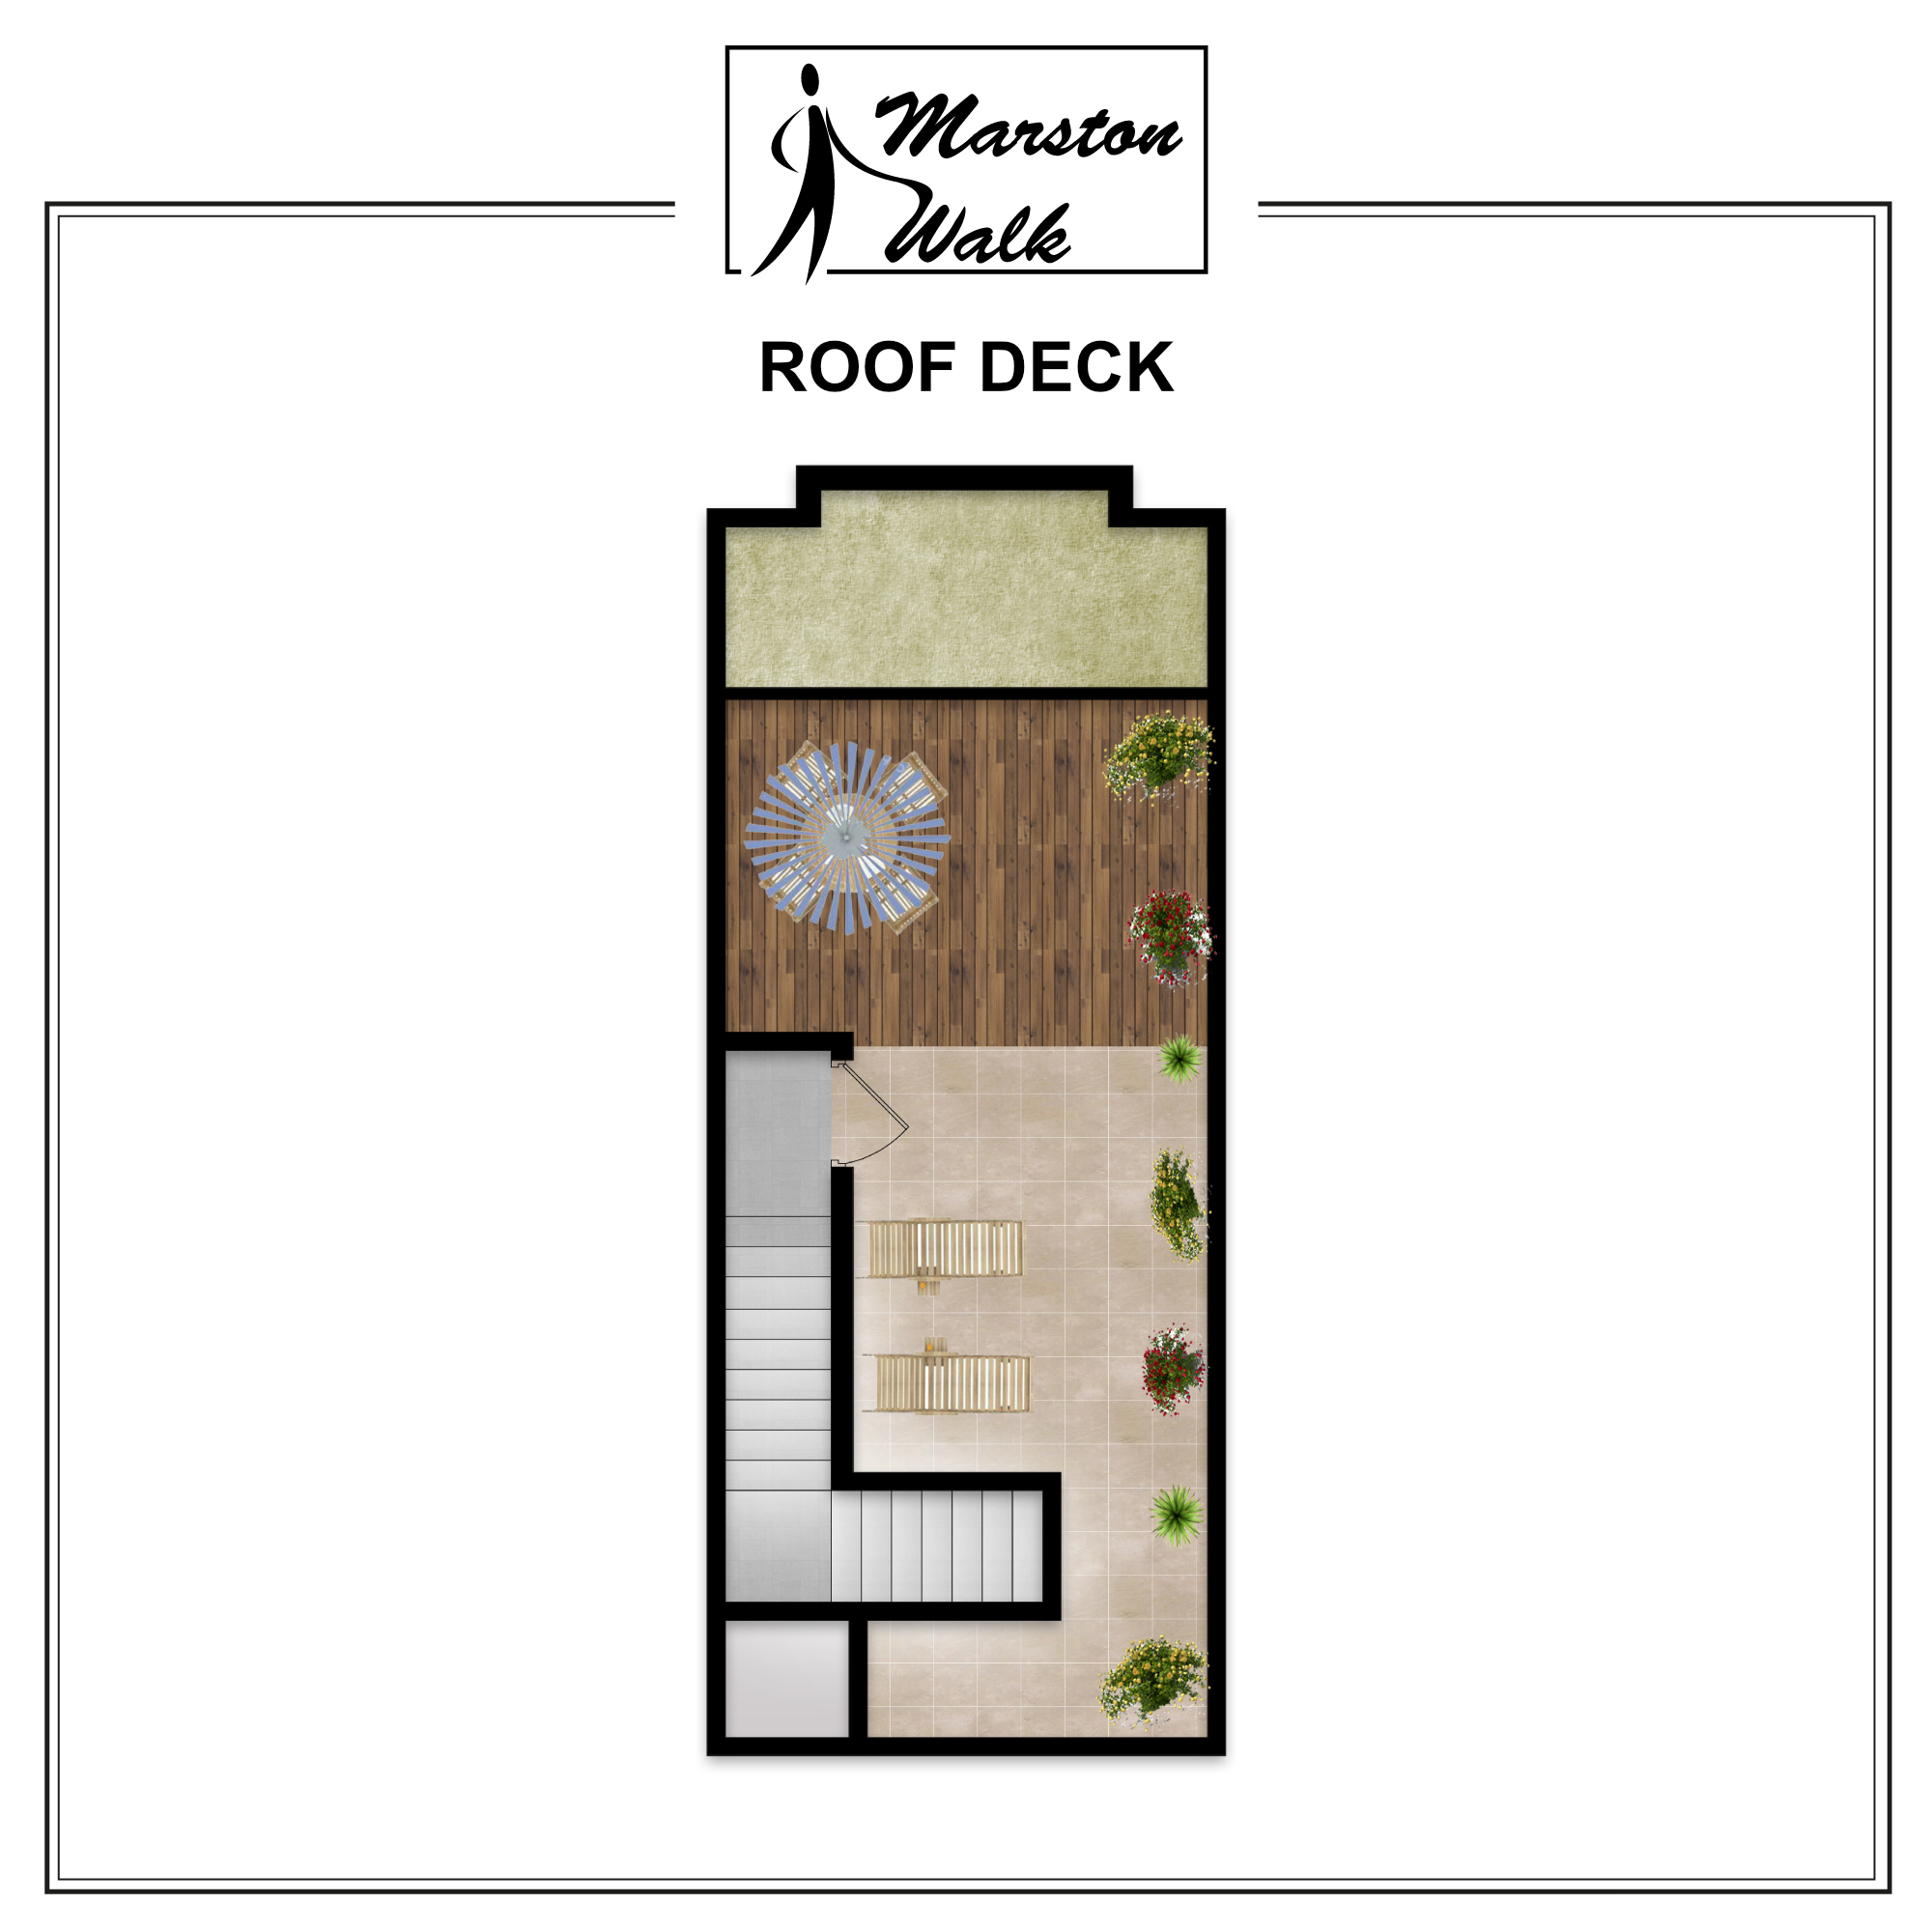 marston-walk_roof-deck